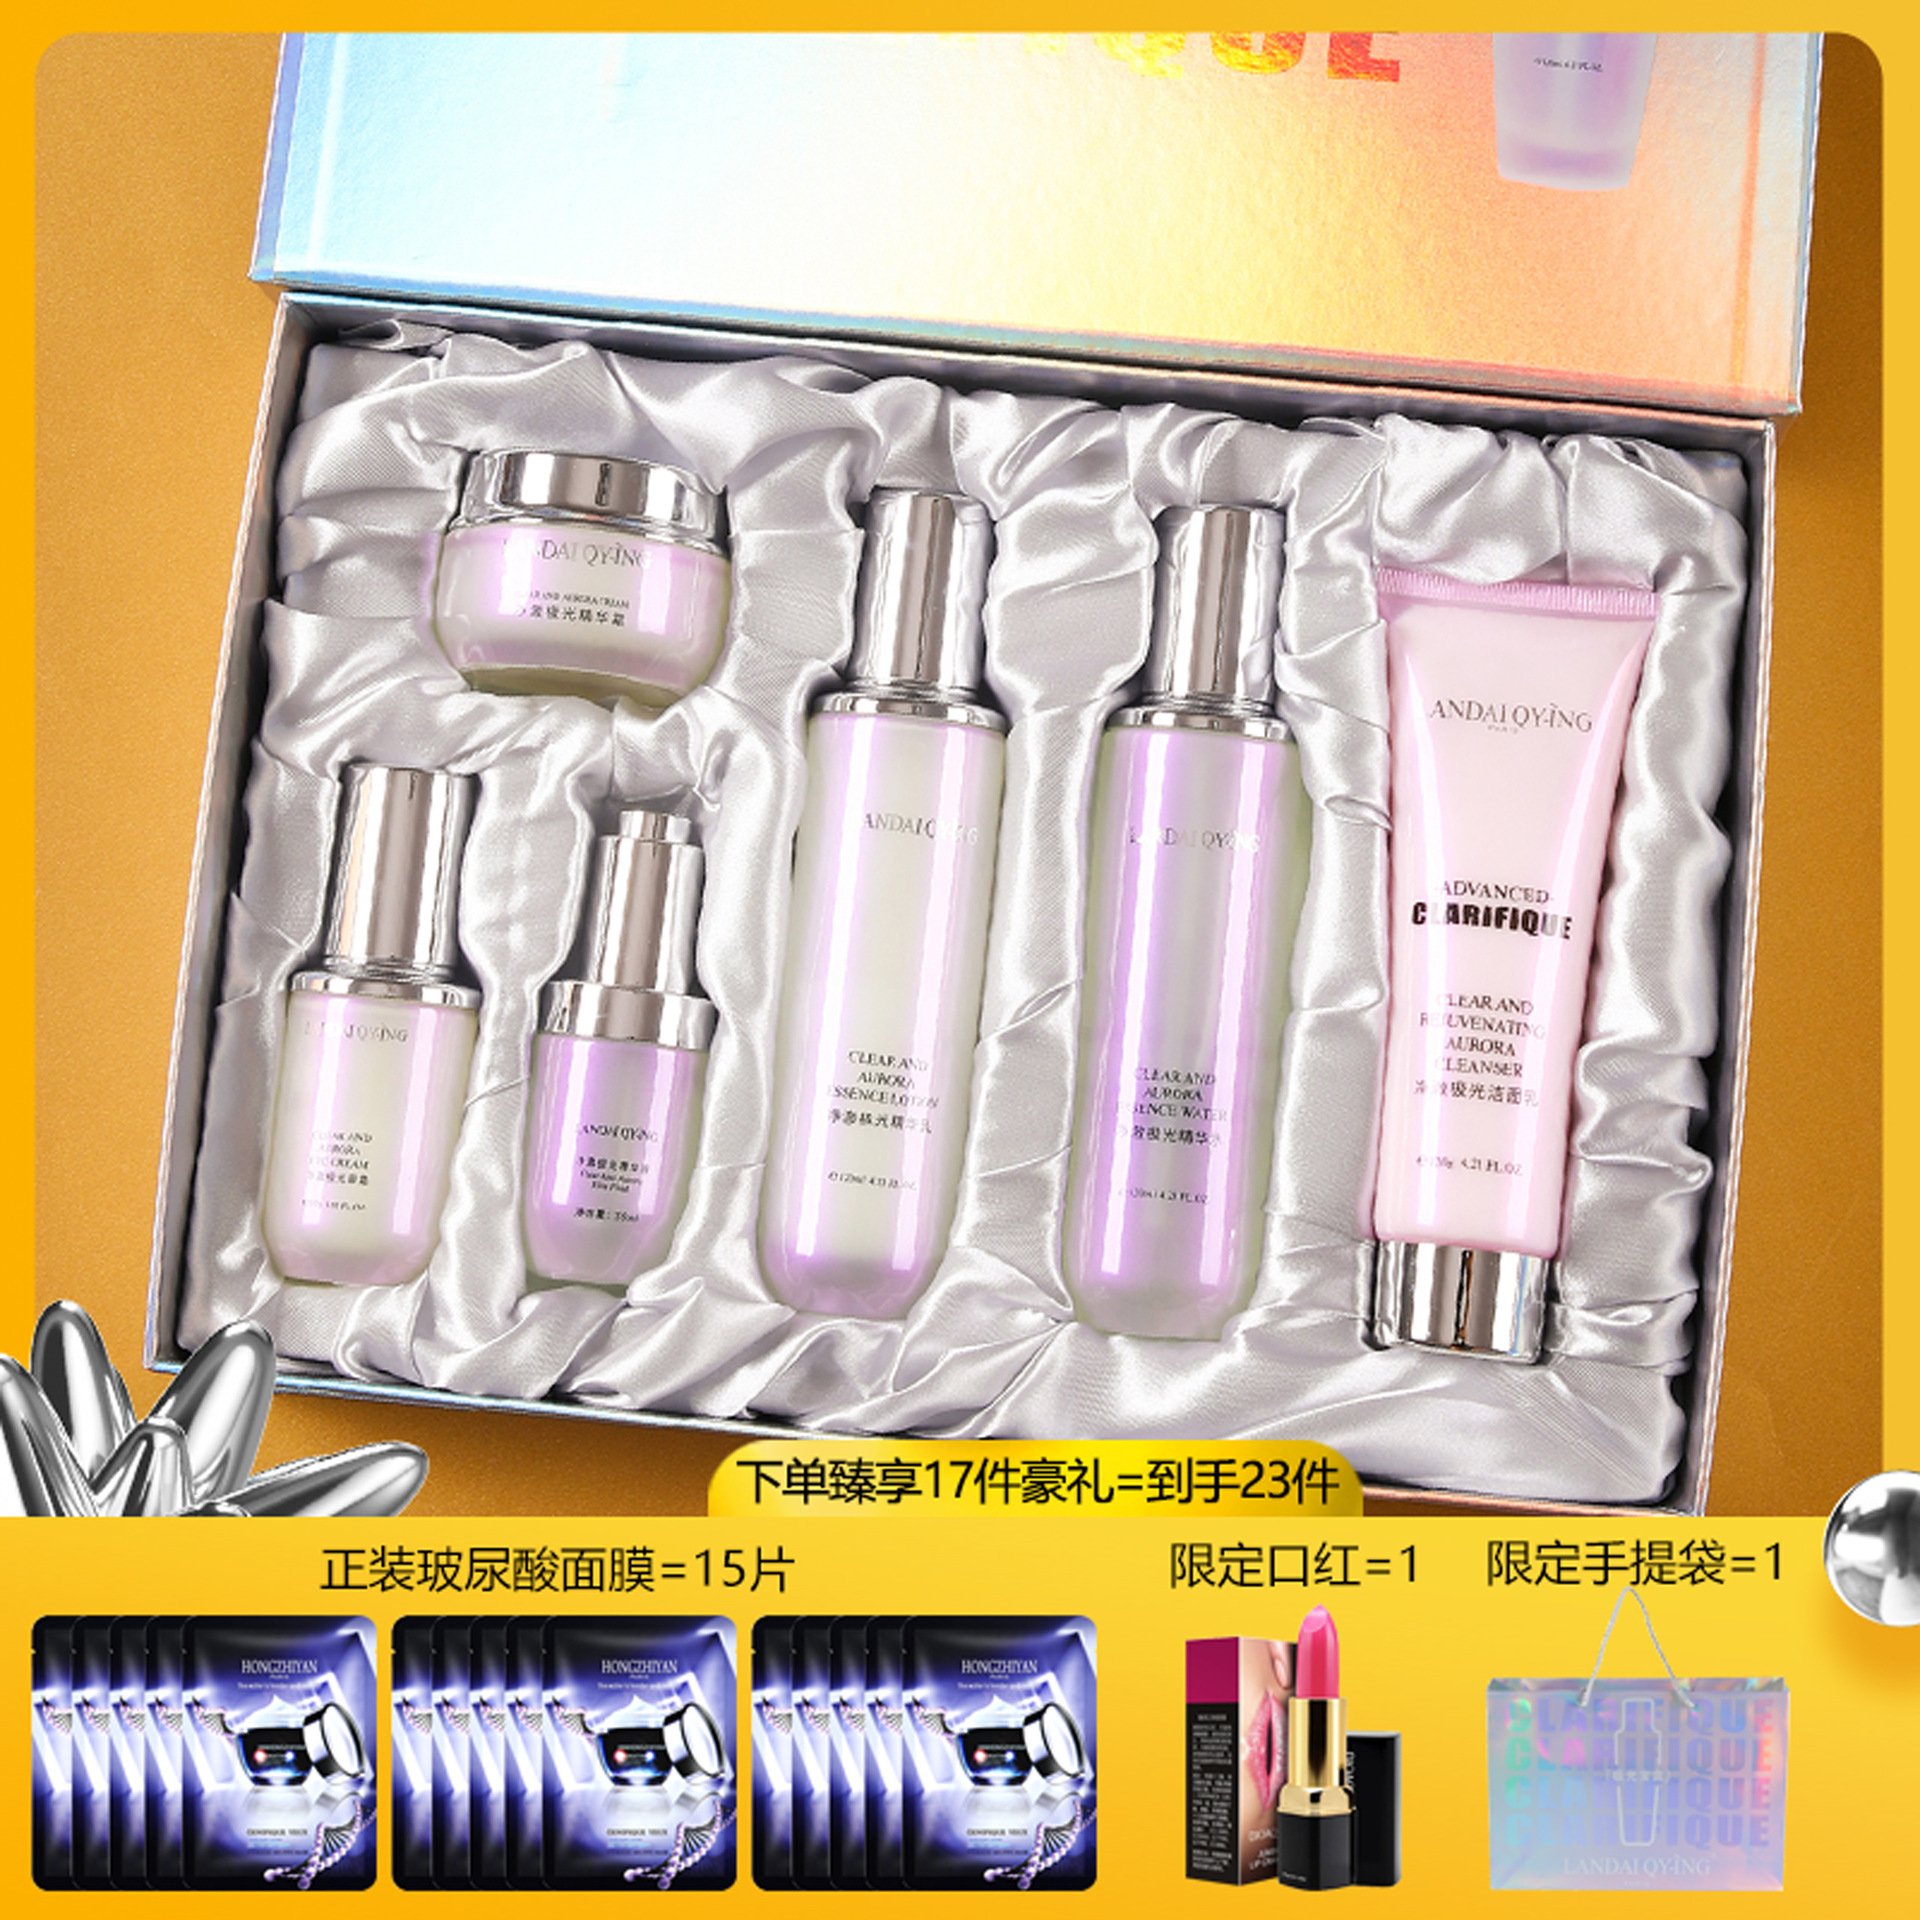 Lanwan Skin Care Product Set Aurora Water Wrinkle Resisting, Firming, Brightening Skin Tone, Shrinking Pores Flagship Store Full Set Gift Box for Women